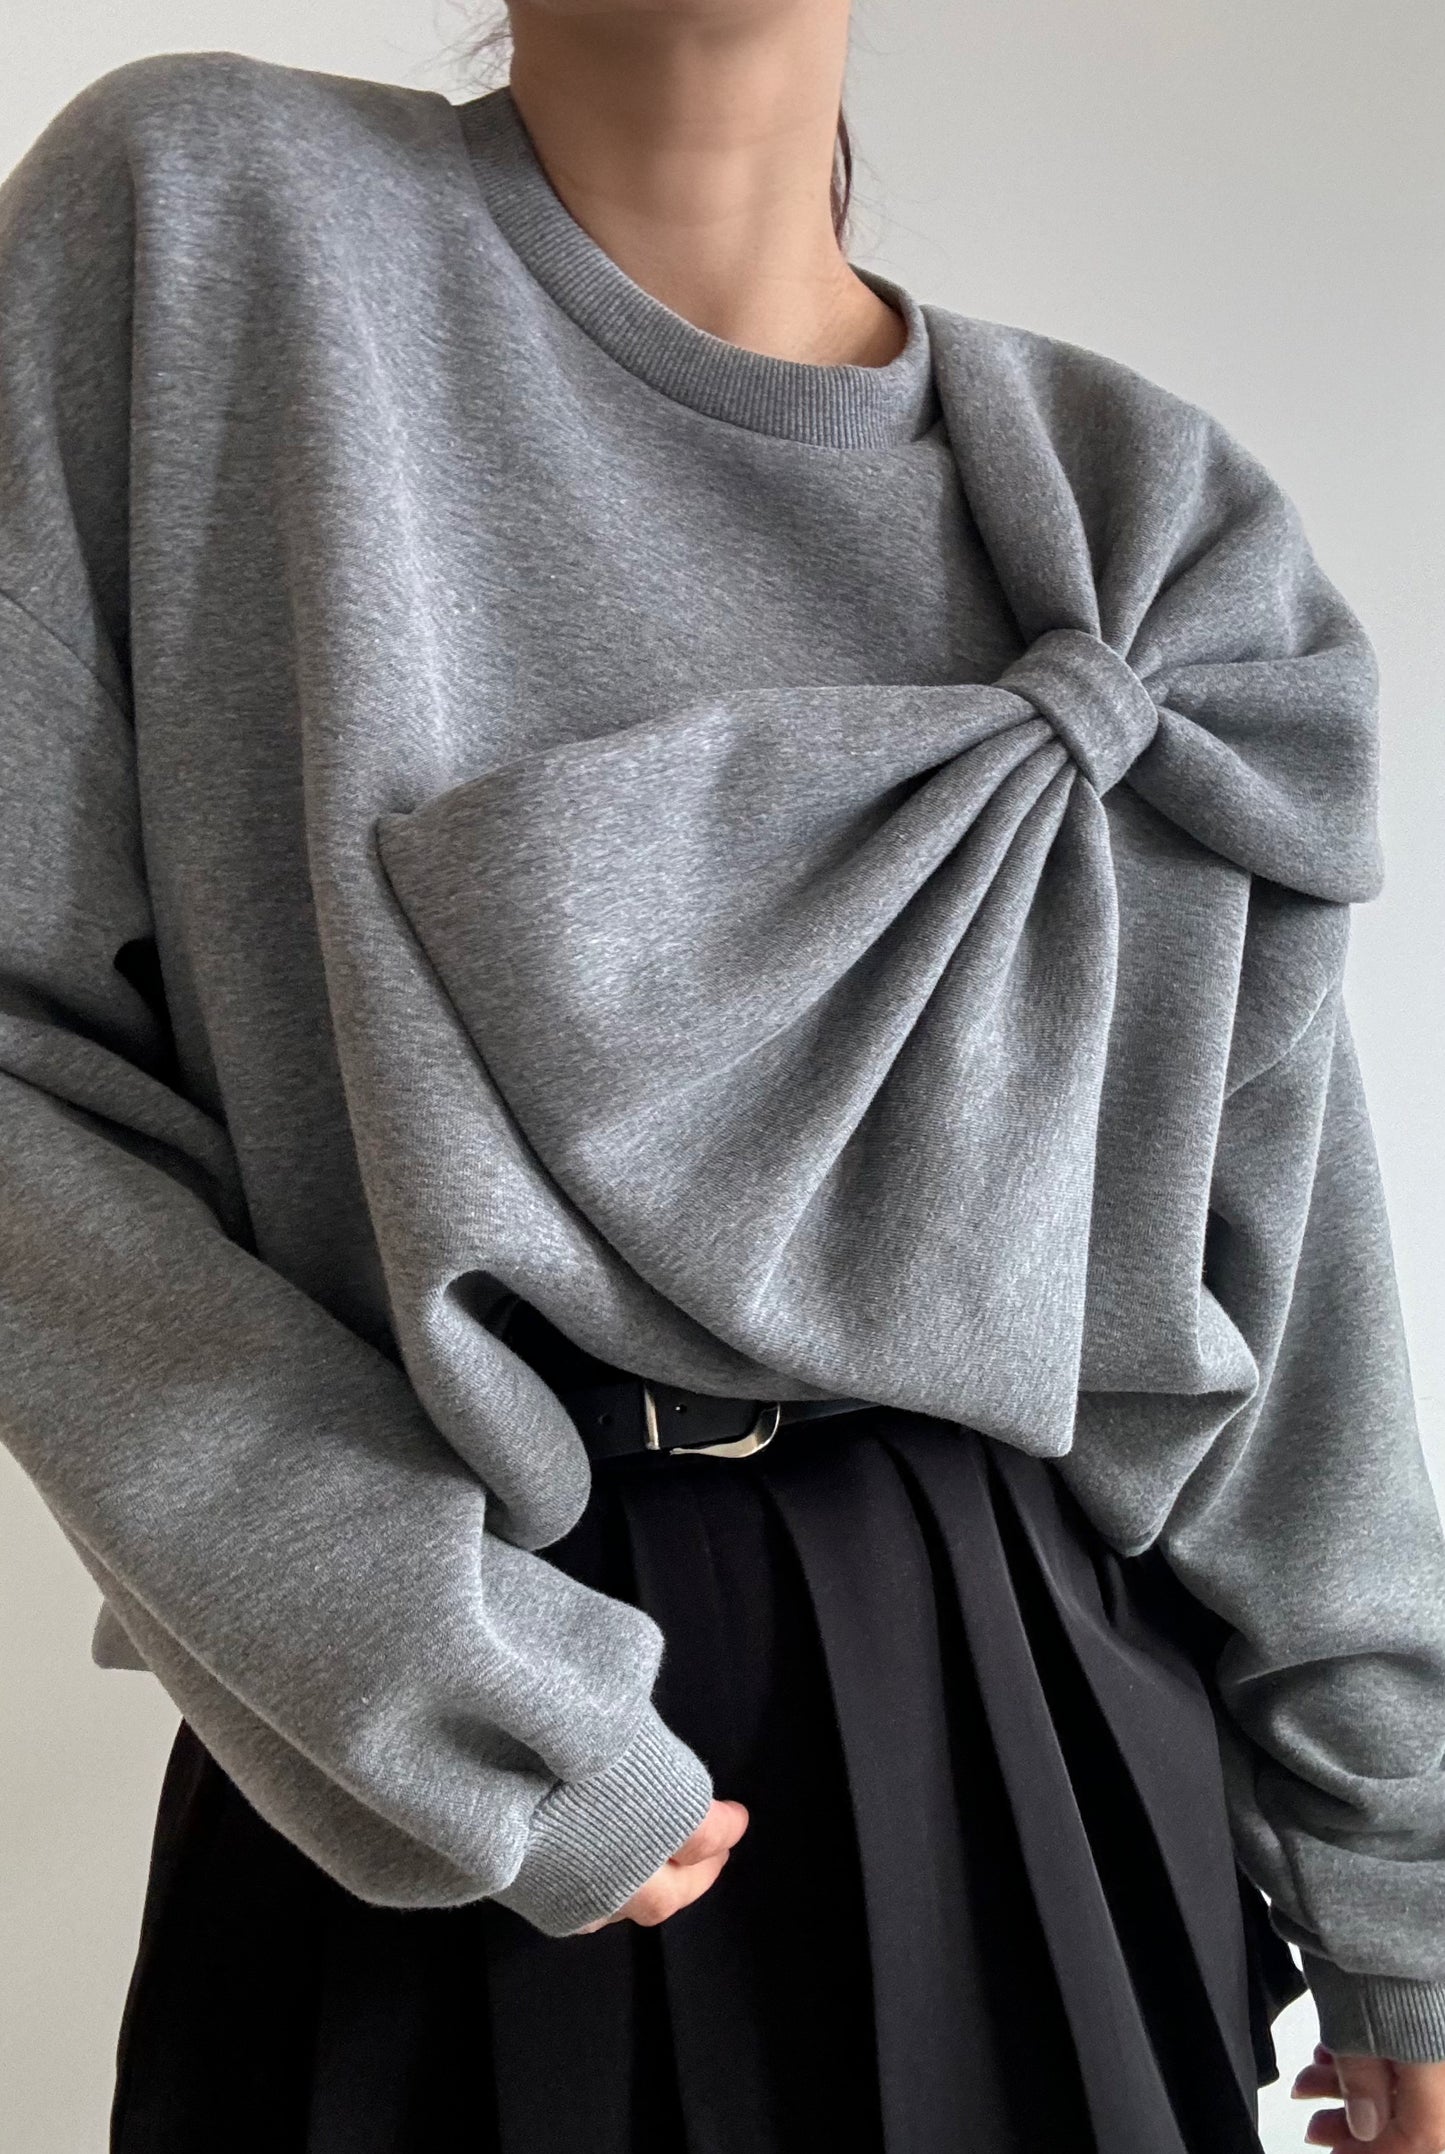 Camisola/Sweater Lu